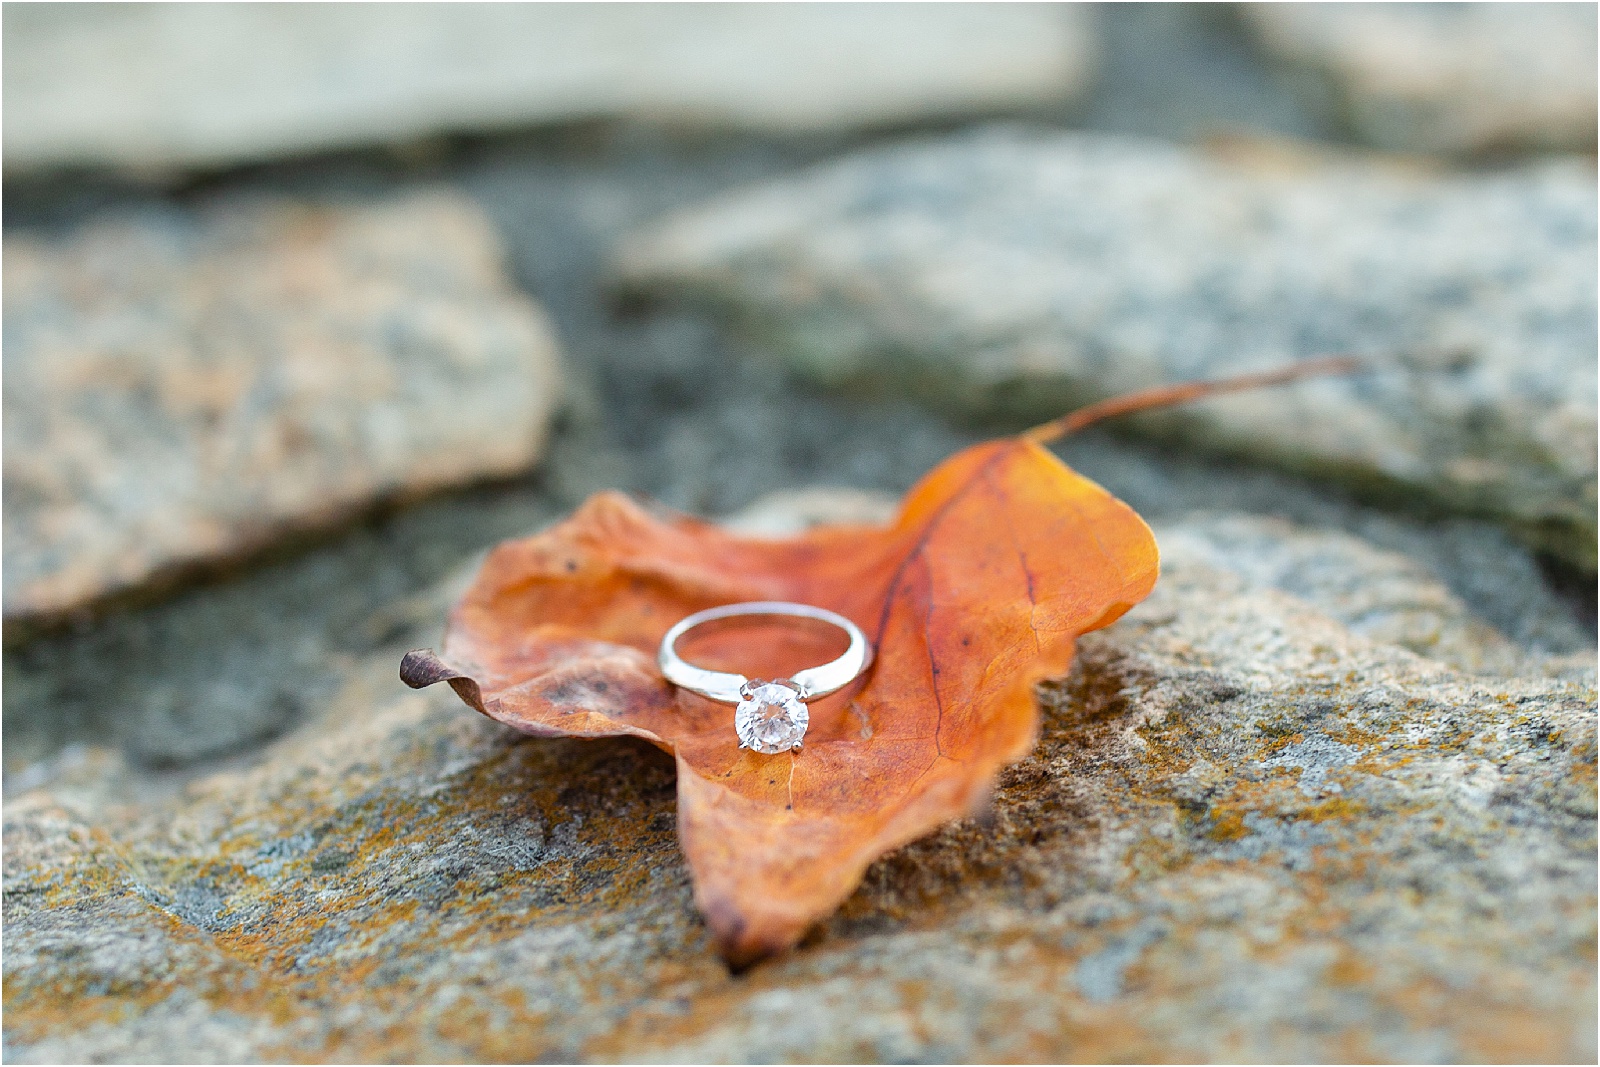 Solid diamond ring resting on orange leaf